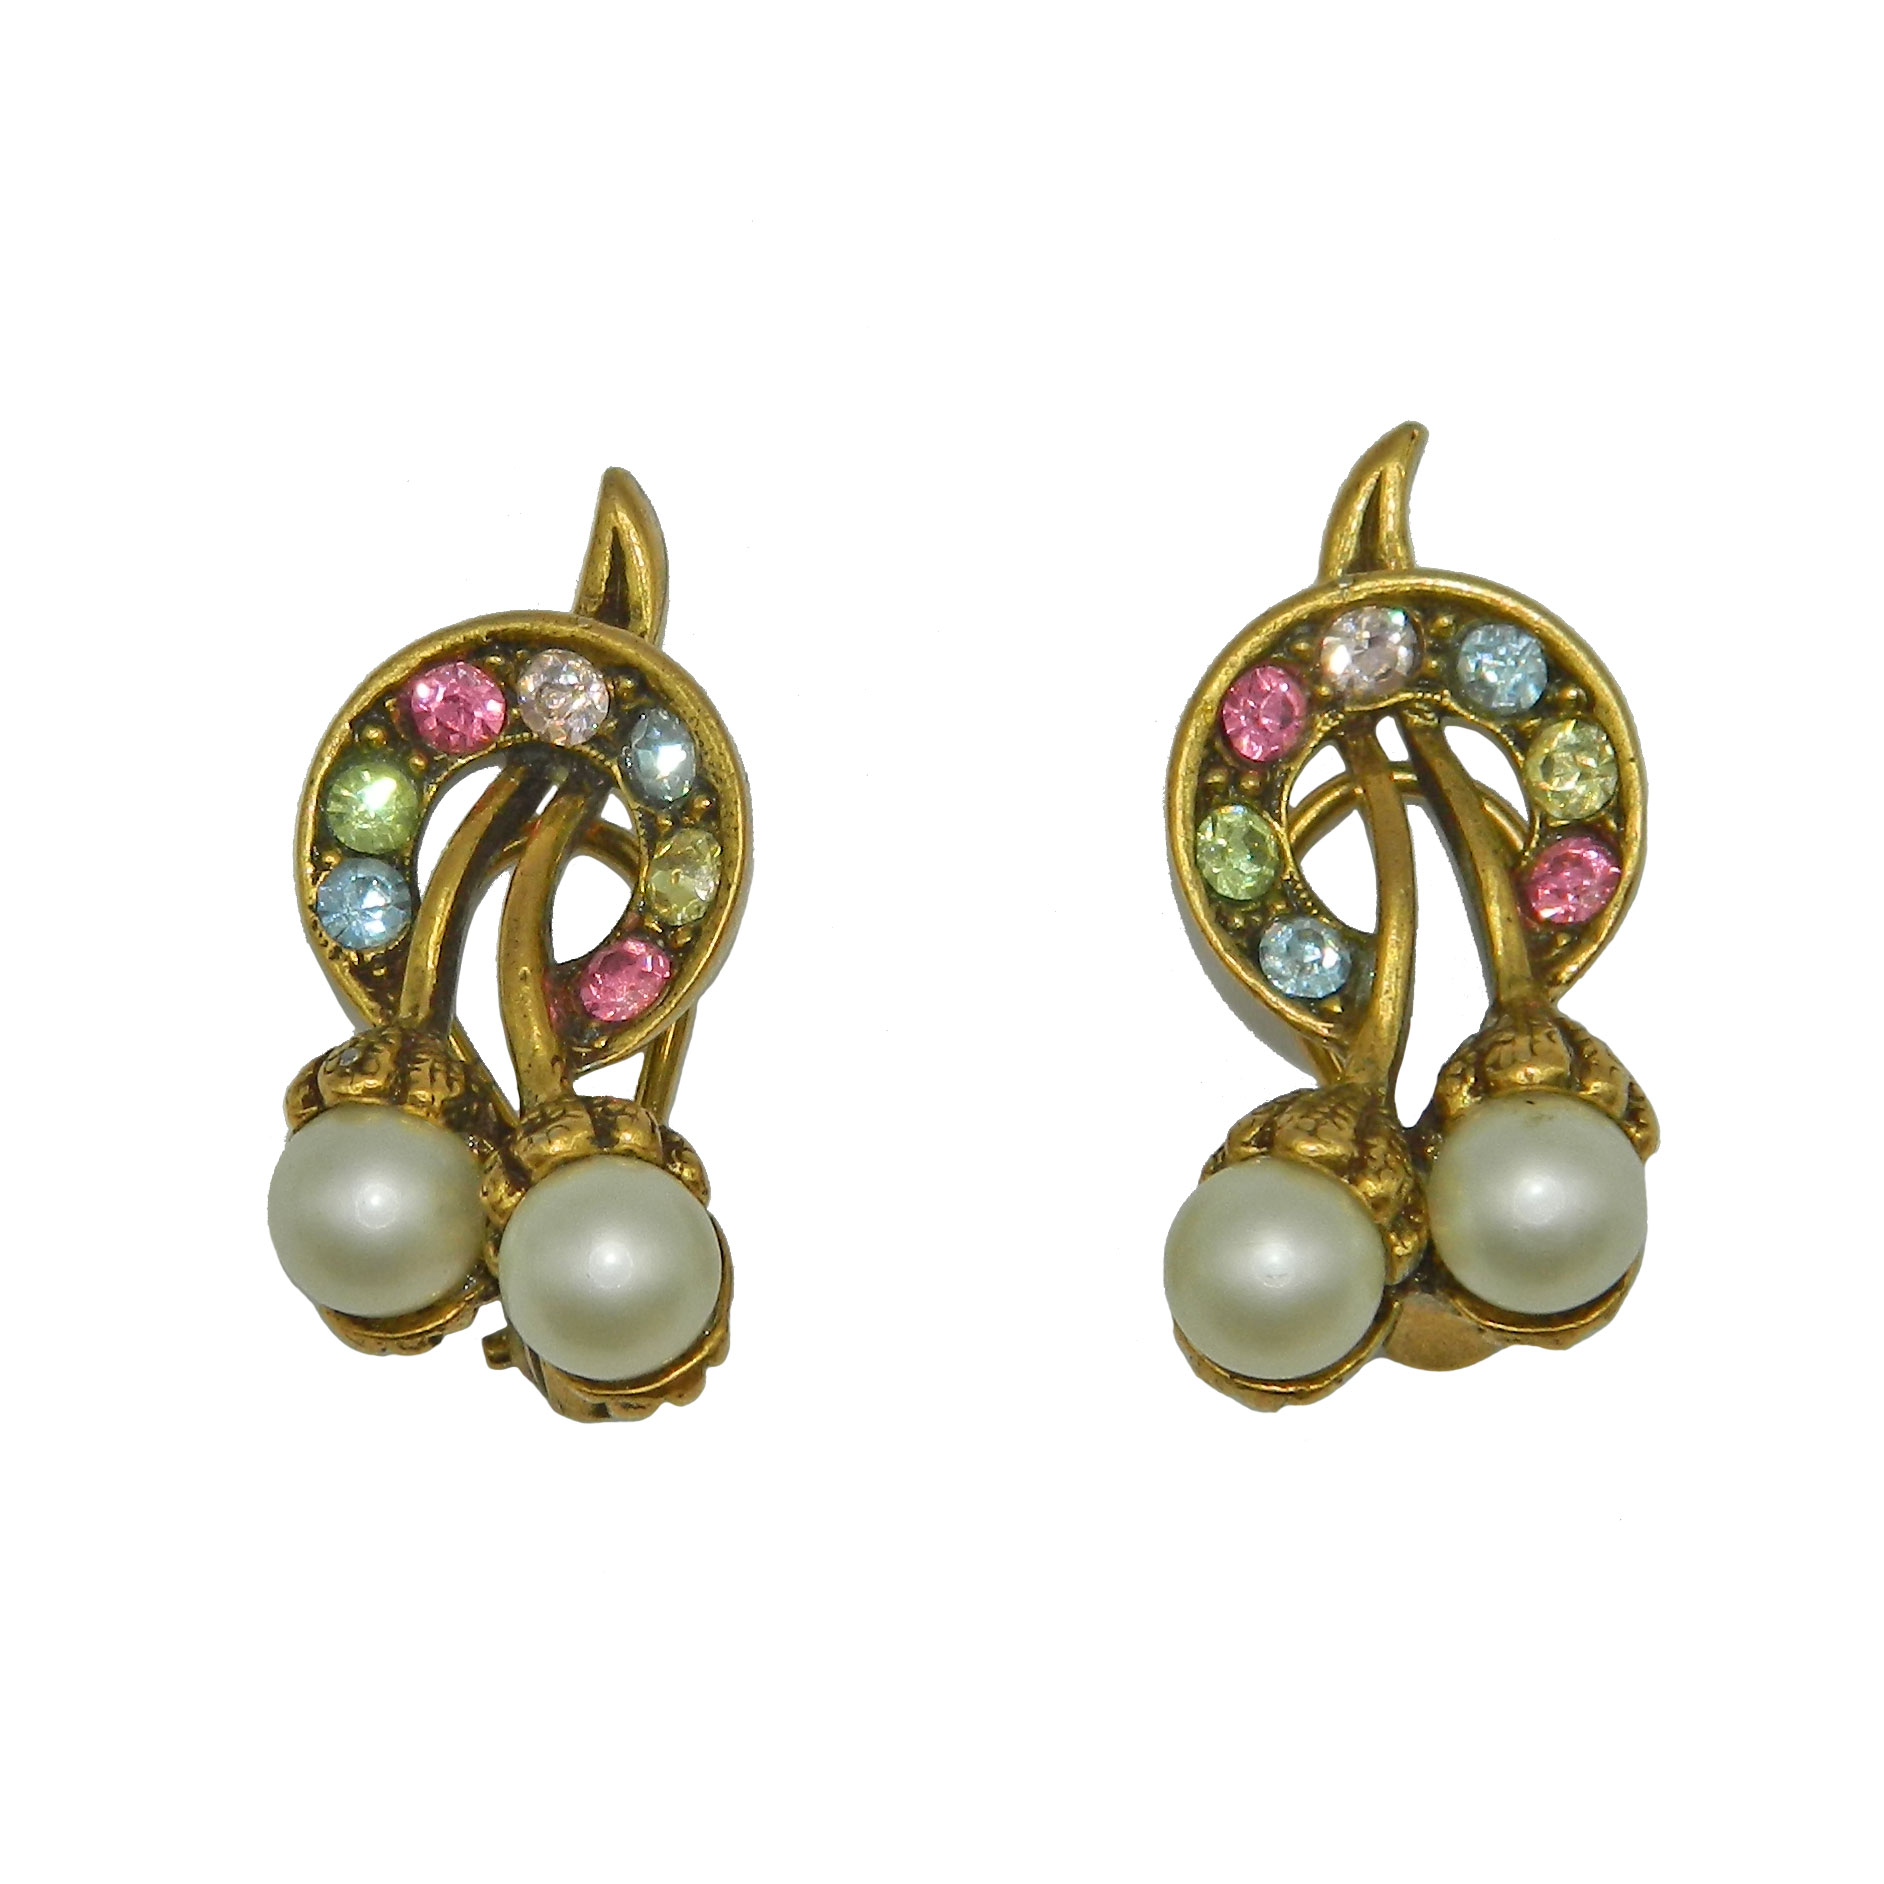 1950s rhinestone earrings